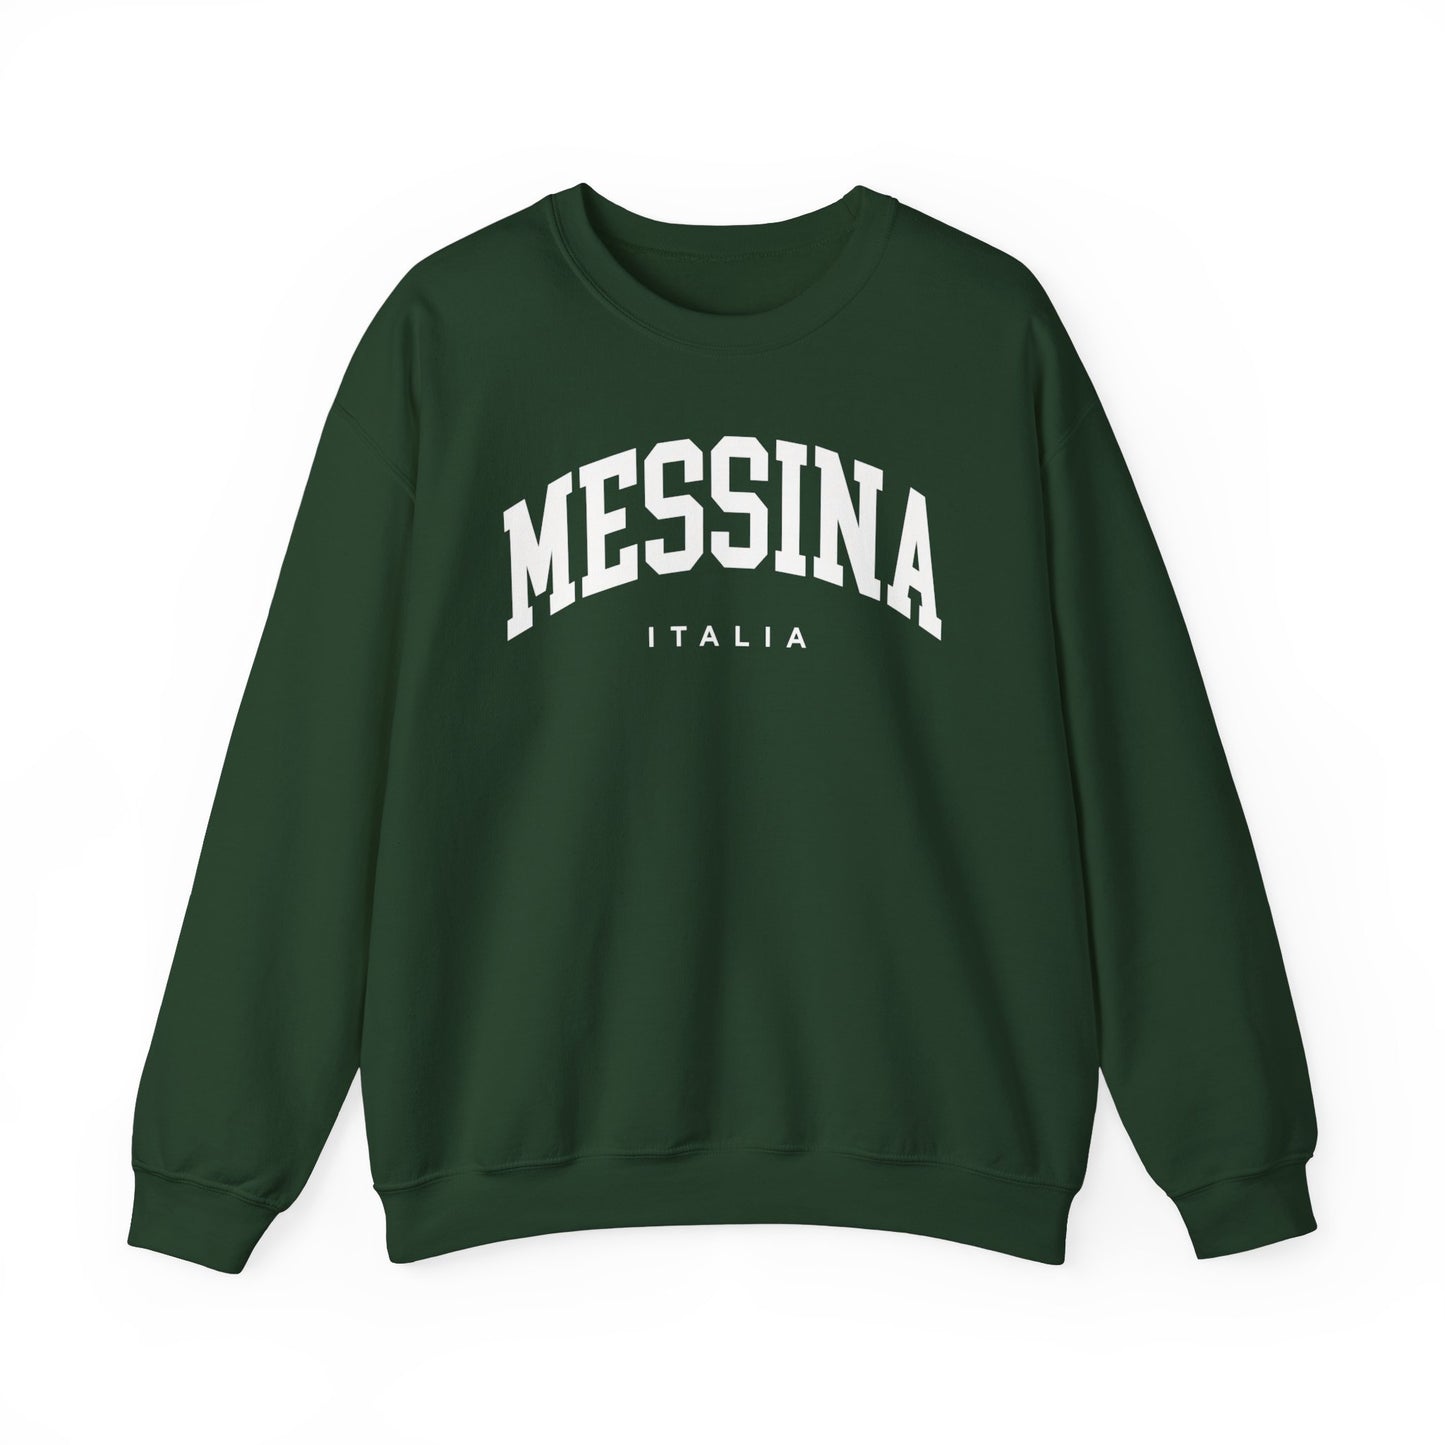 Messina Italy Sweatshirt